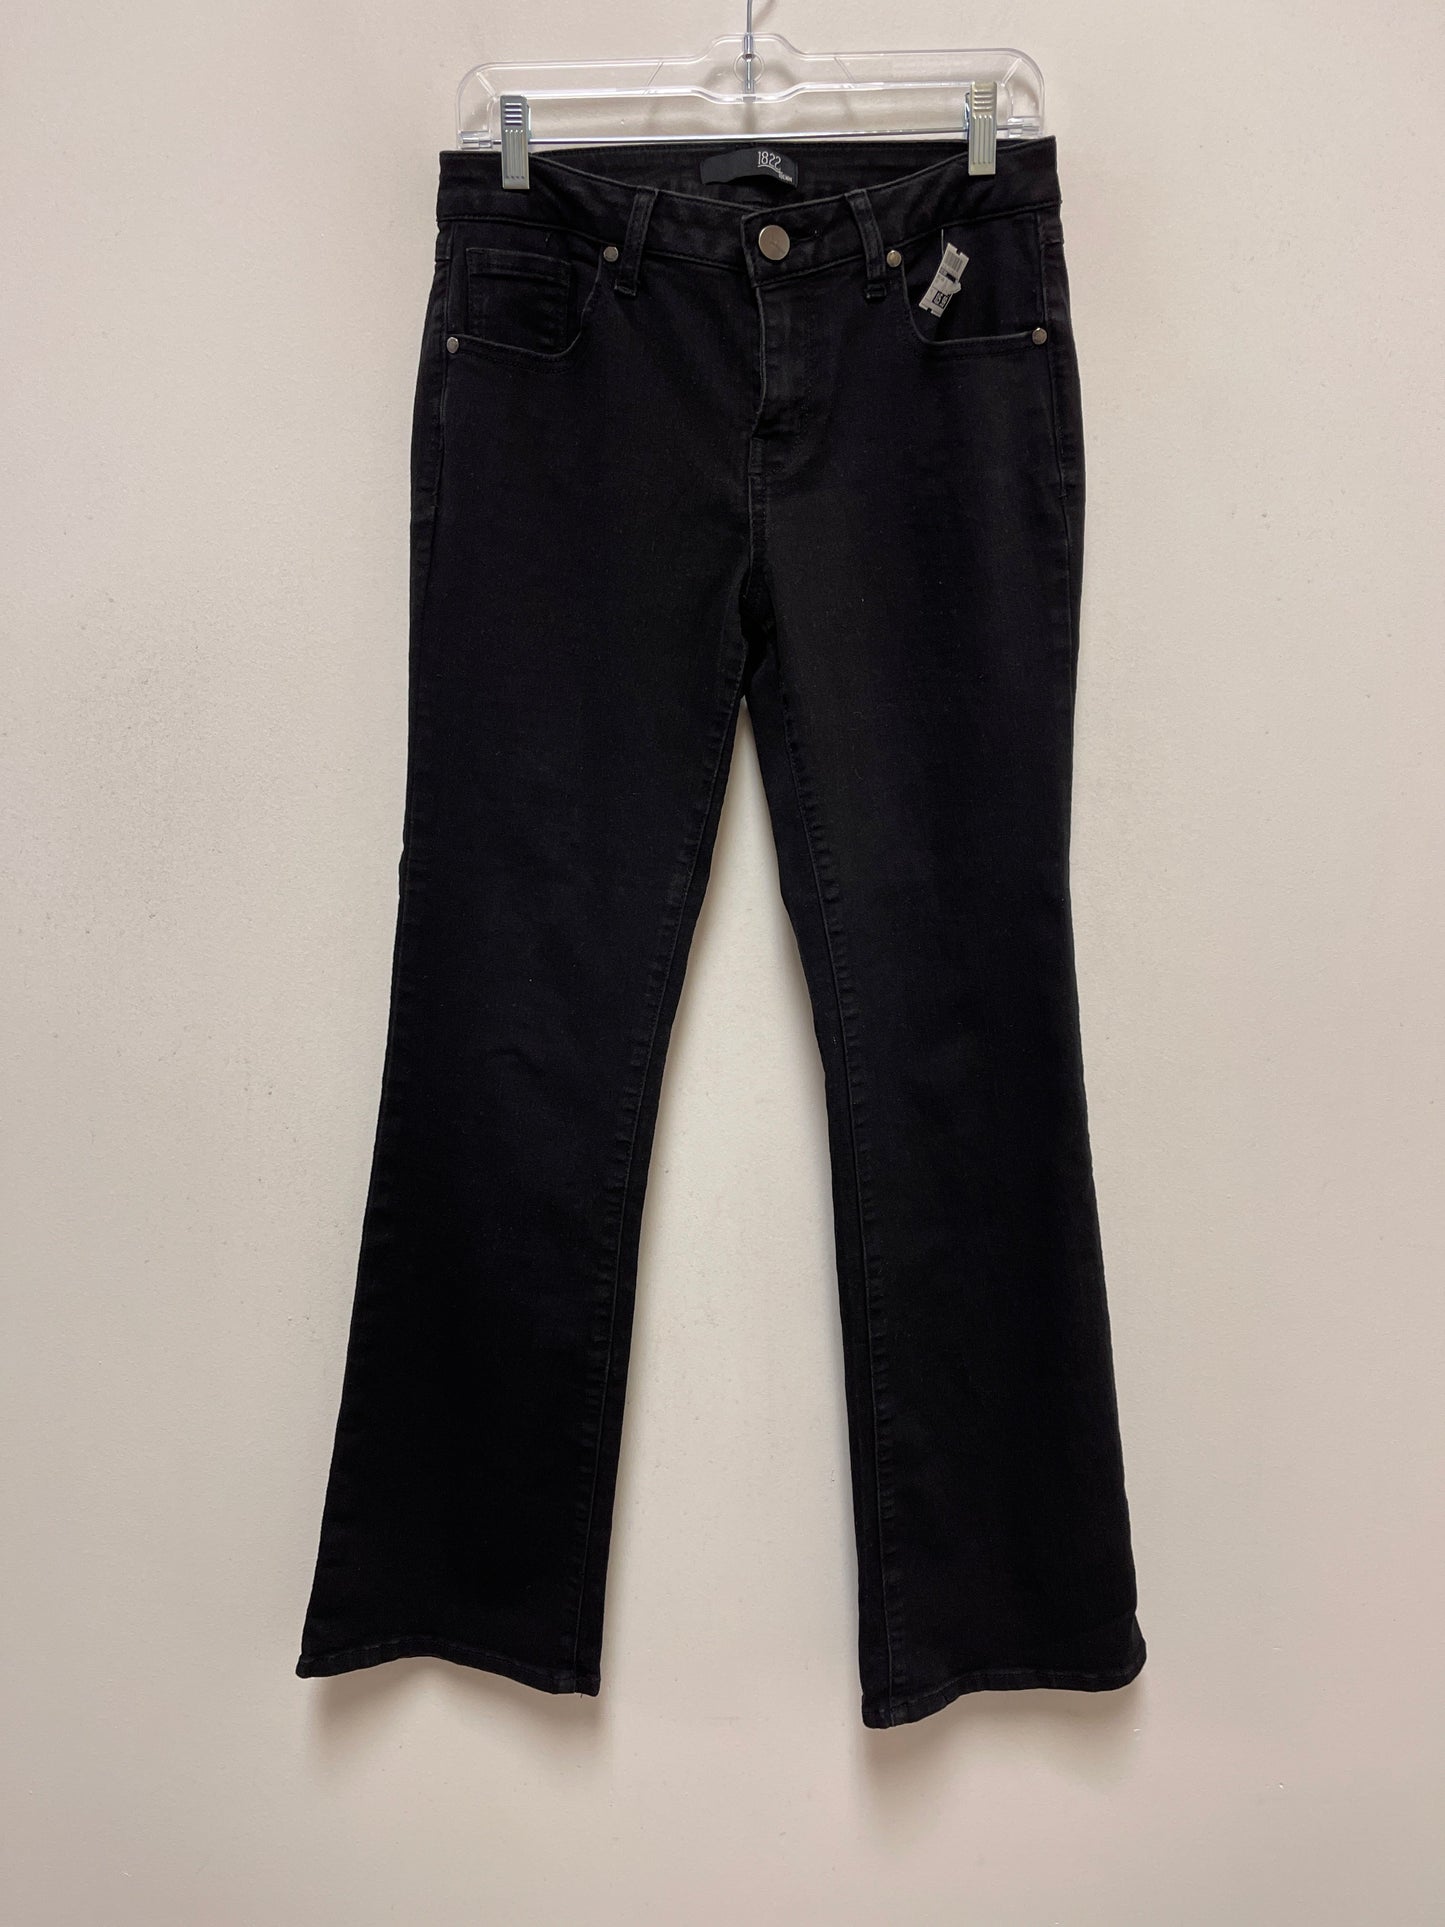 Black Jeans Flared 1822 Denim, Size 8